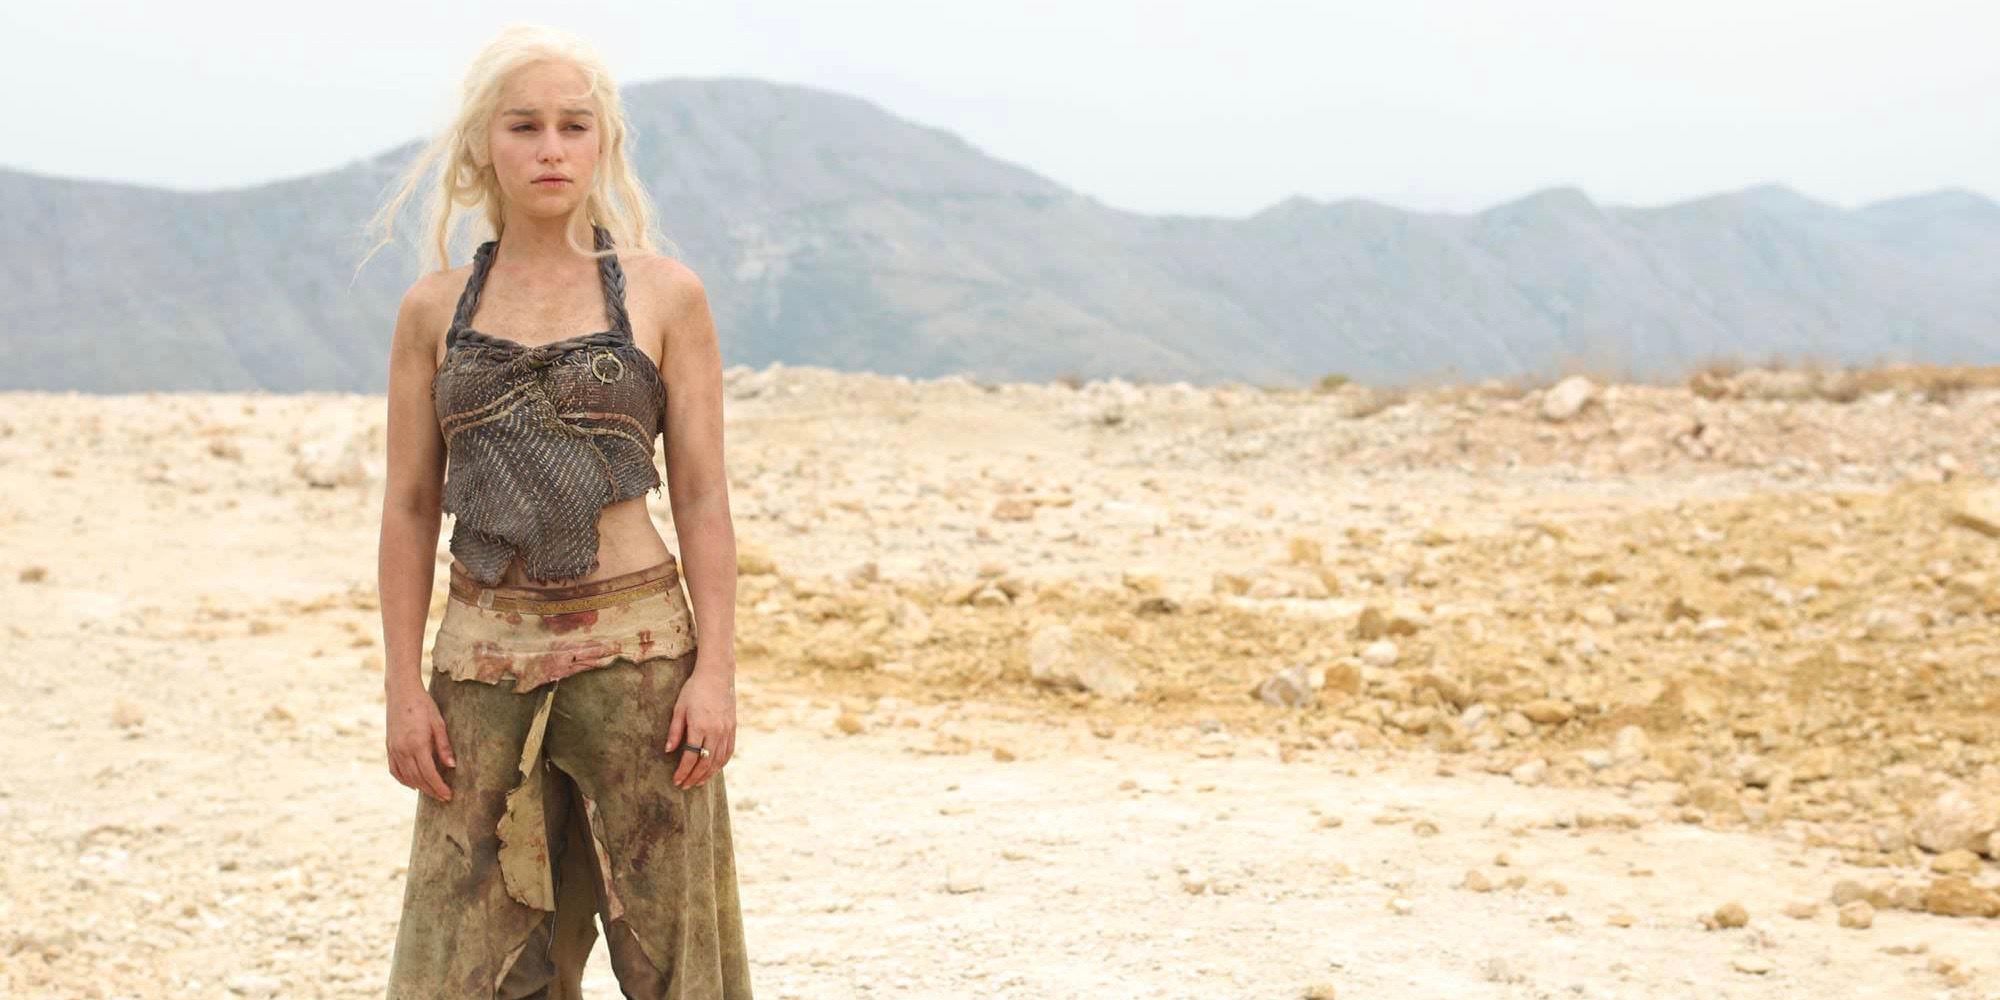 Daenerys standing in the desert in Game of Thrones